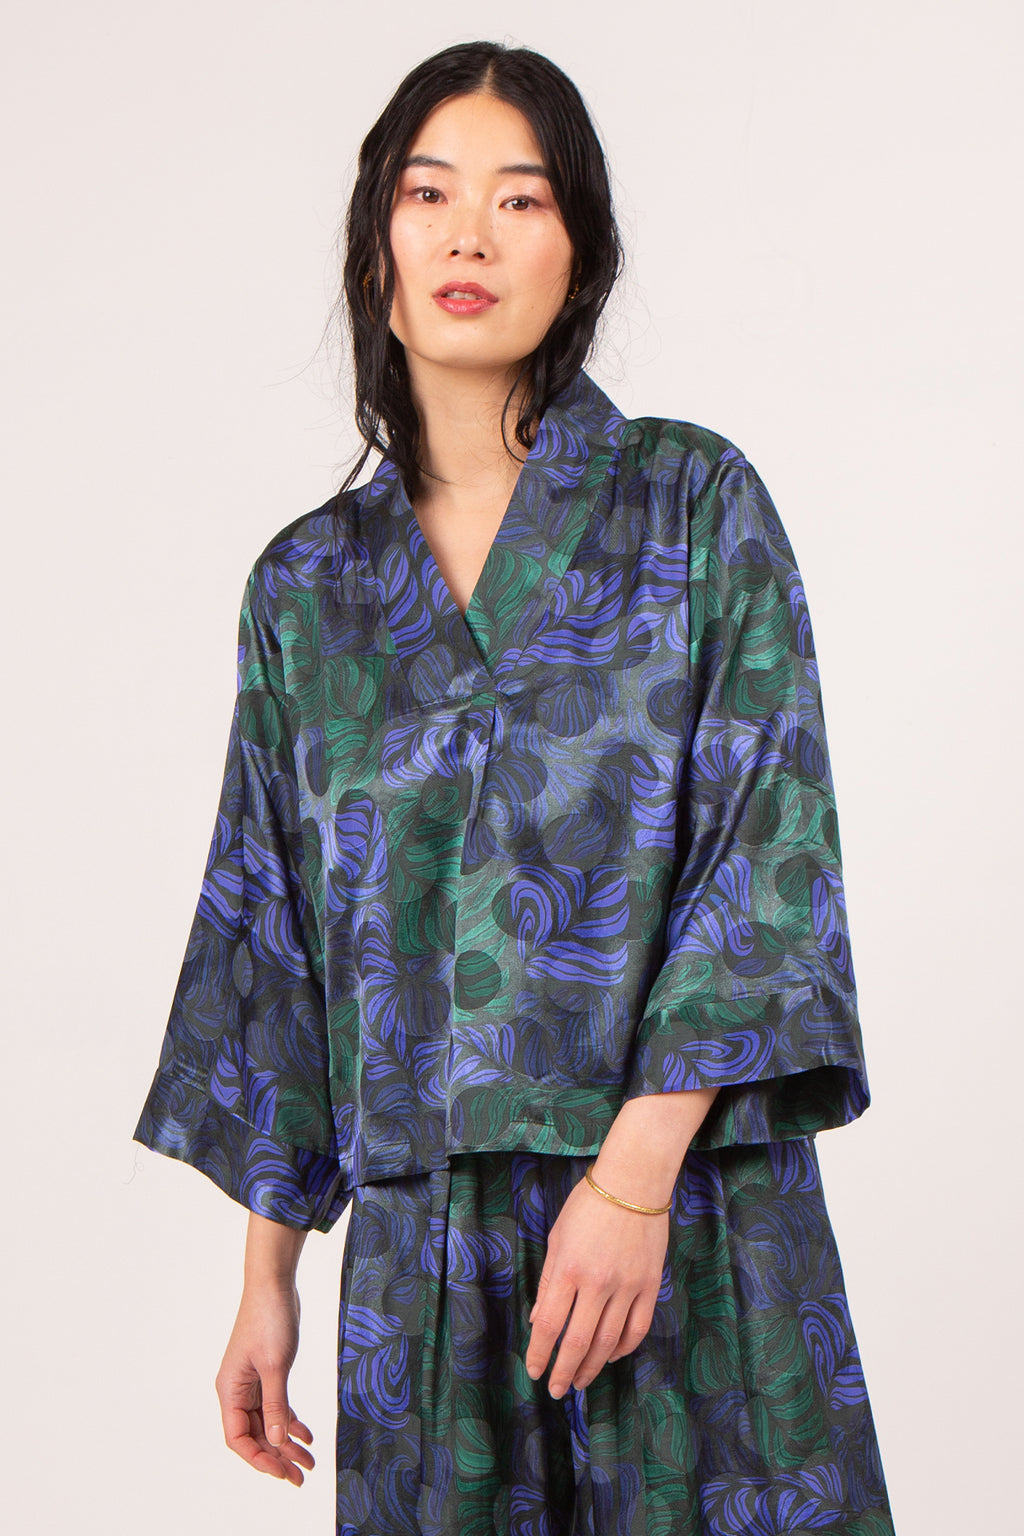 Clotilde blouse in green blue leaves